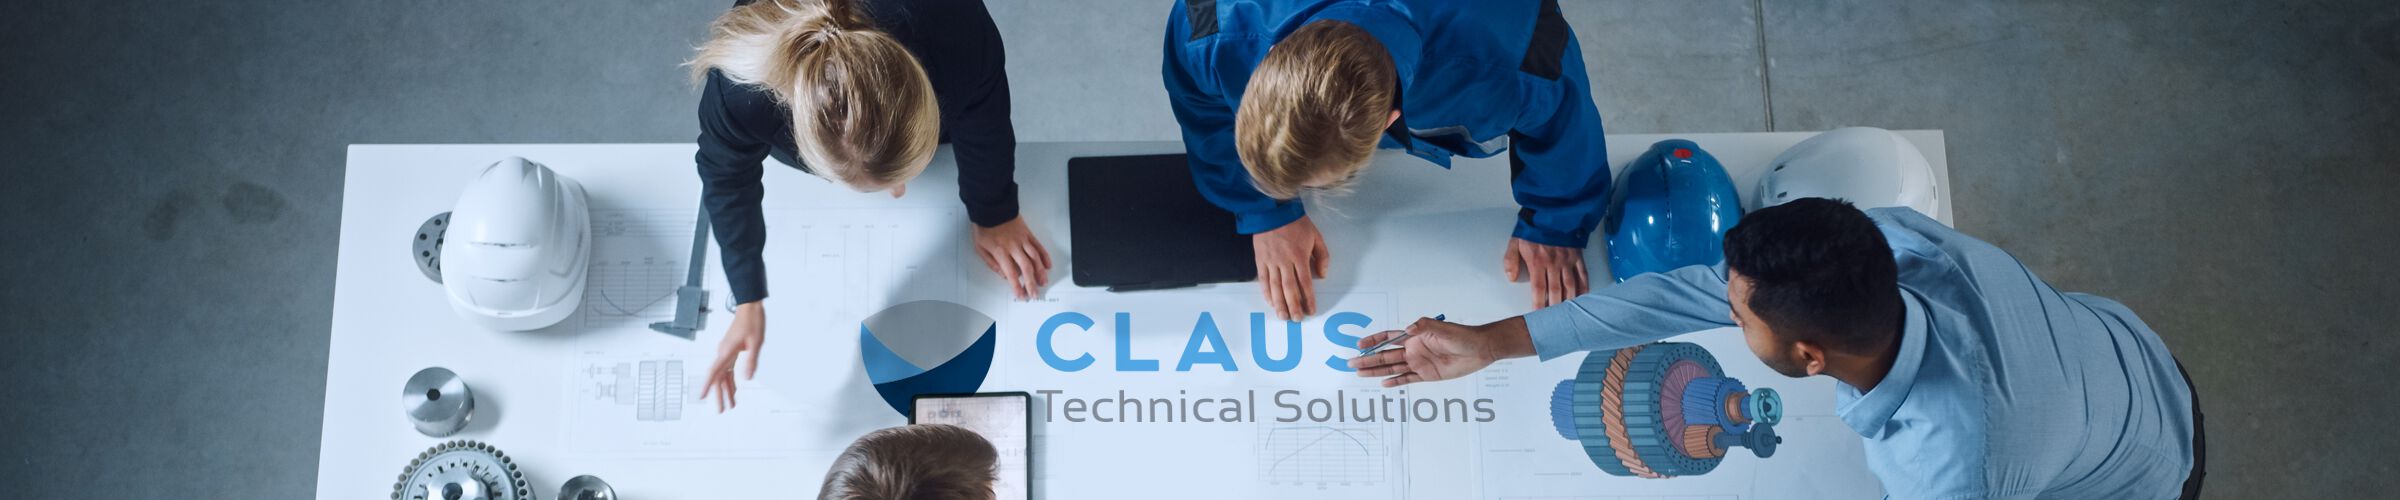 CLAUS Technical Solutions, Consulting, Konzeption, technische Beratung, Steuerung, Auftragsmanagement, Facility Management, Gebäudemanagement, Immobilienmanagement, Objektmanagement